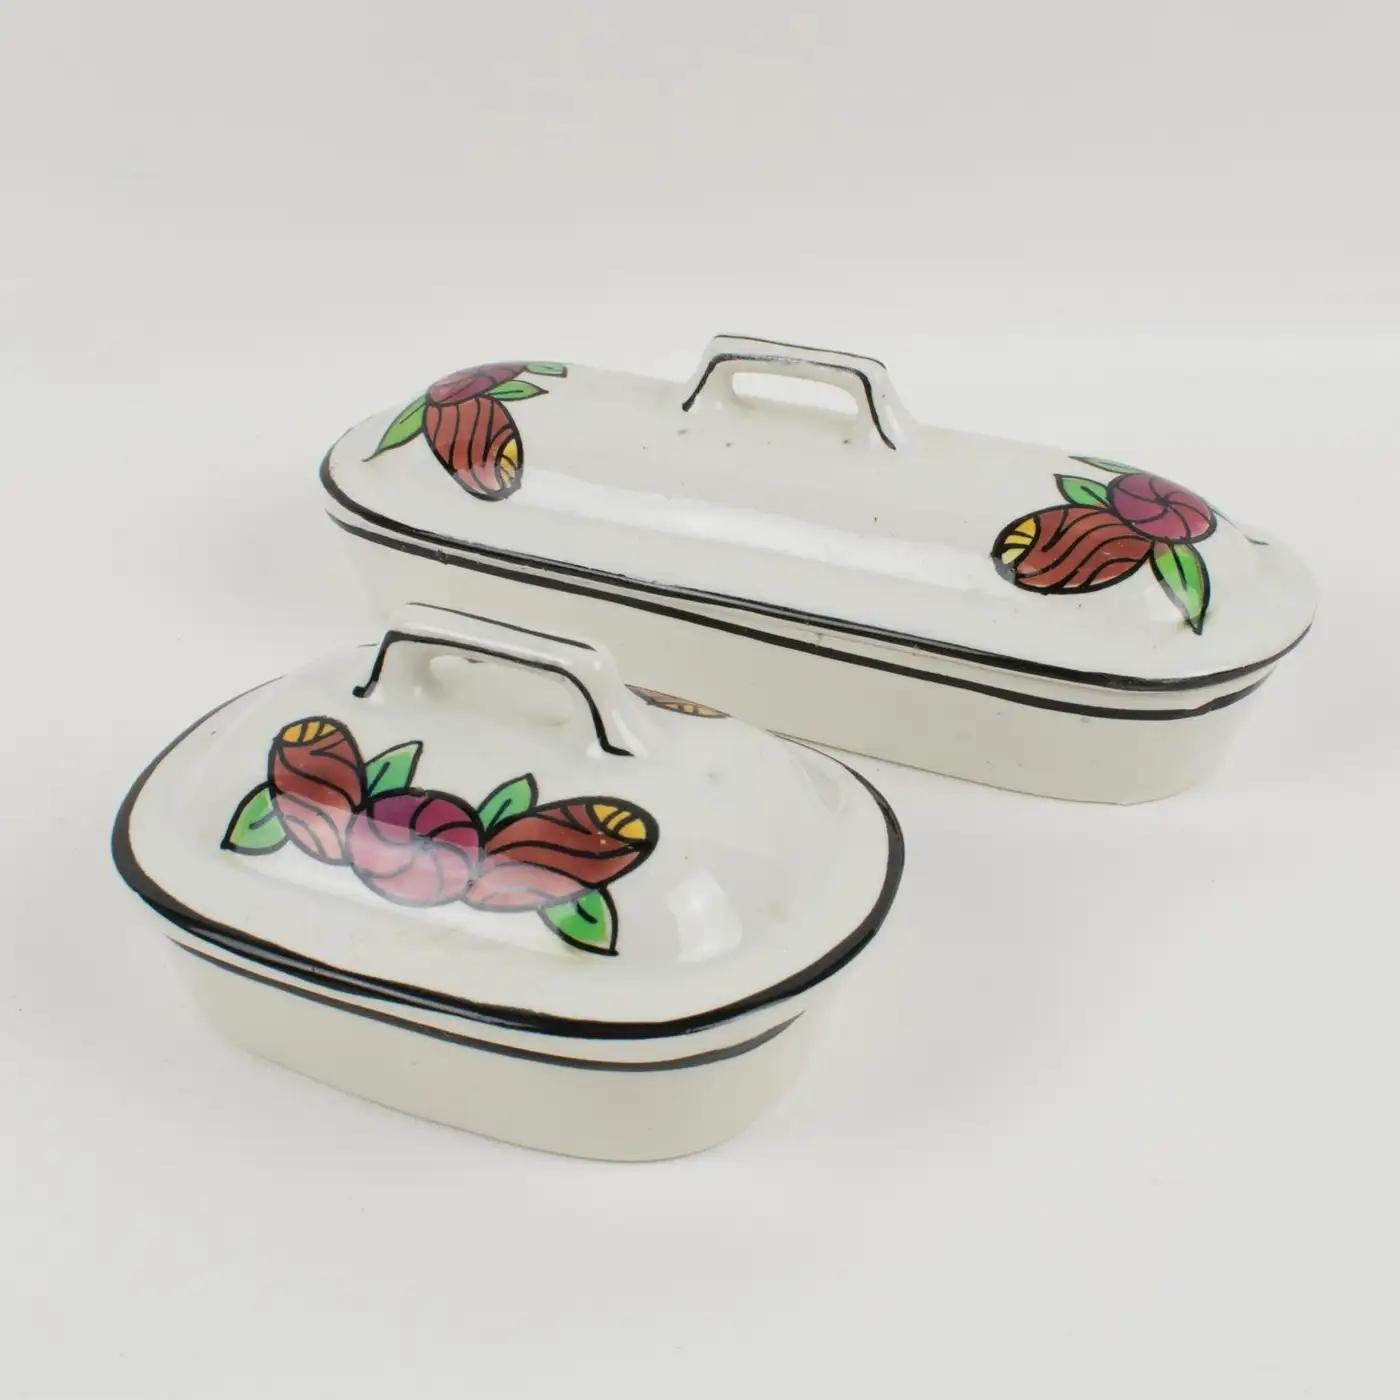 Art Deco Auguste Mouzin Ceramic Toiletry Dresser Bowl, Pitcher and Boxes Set For Sale 10